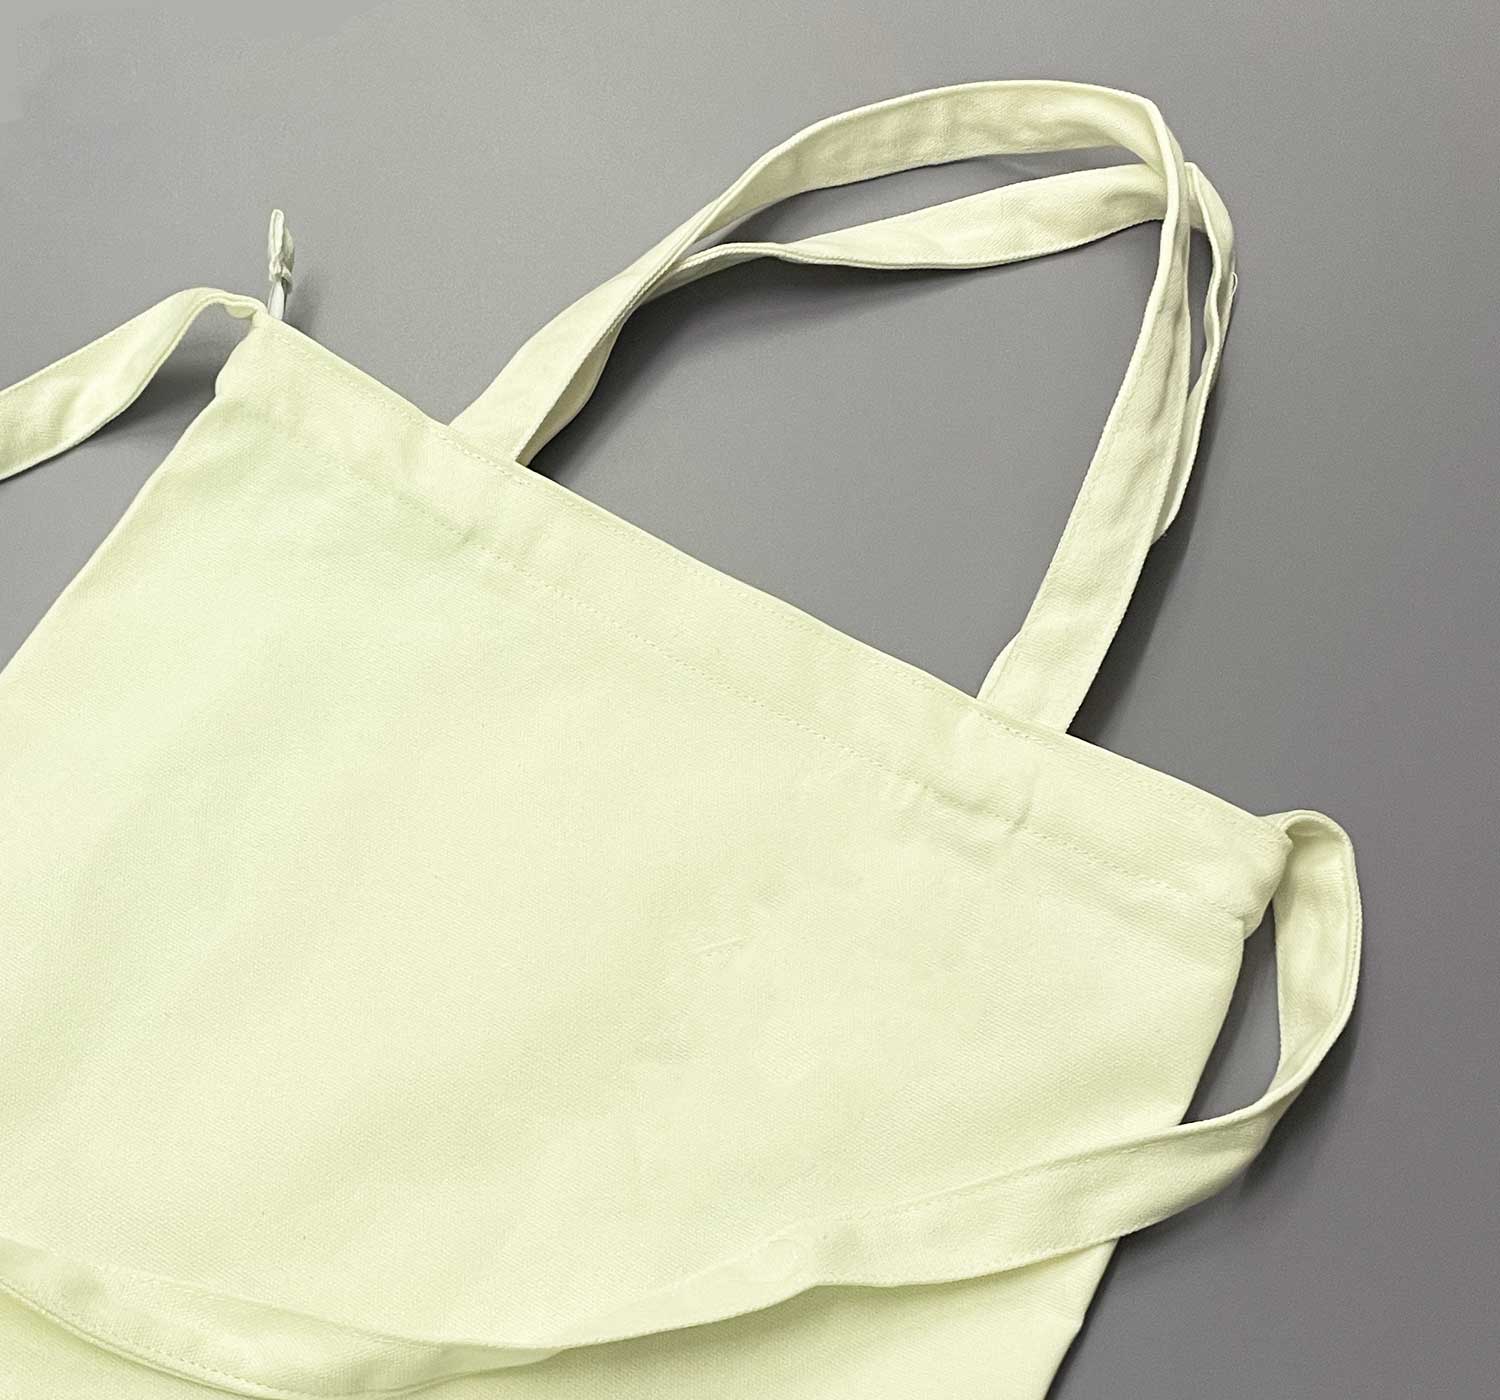 印Totebag | 印束繩袋 | 索繩袋 | 斜孭袋 | 兩用袋 | 訂製Totebag | 印Tote bag | 訂製Tote bag